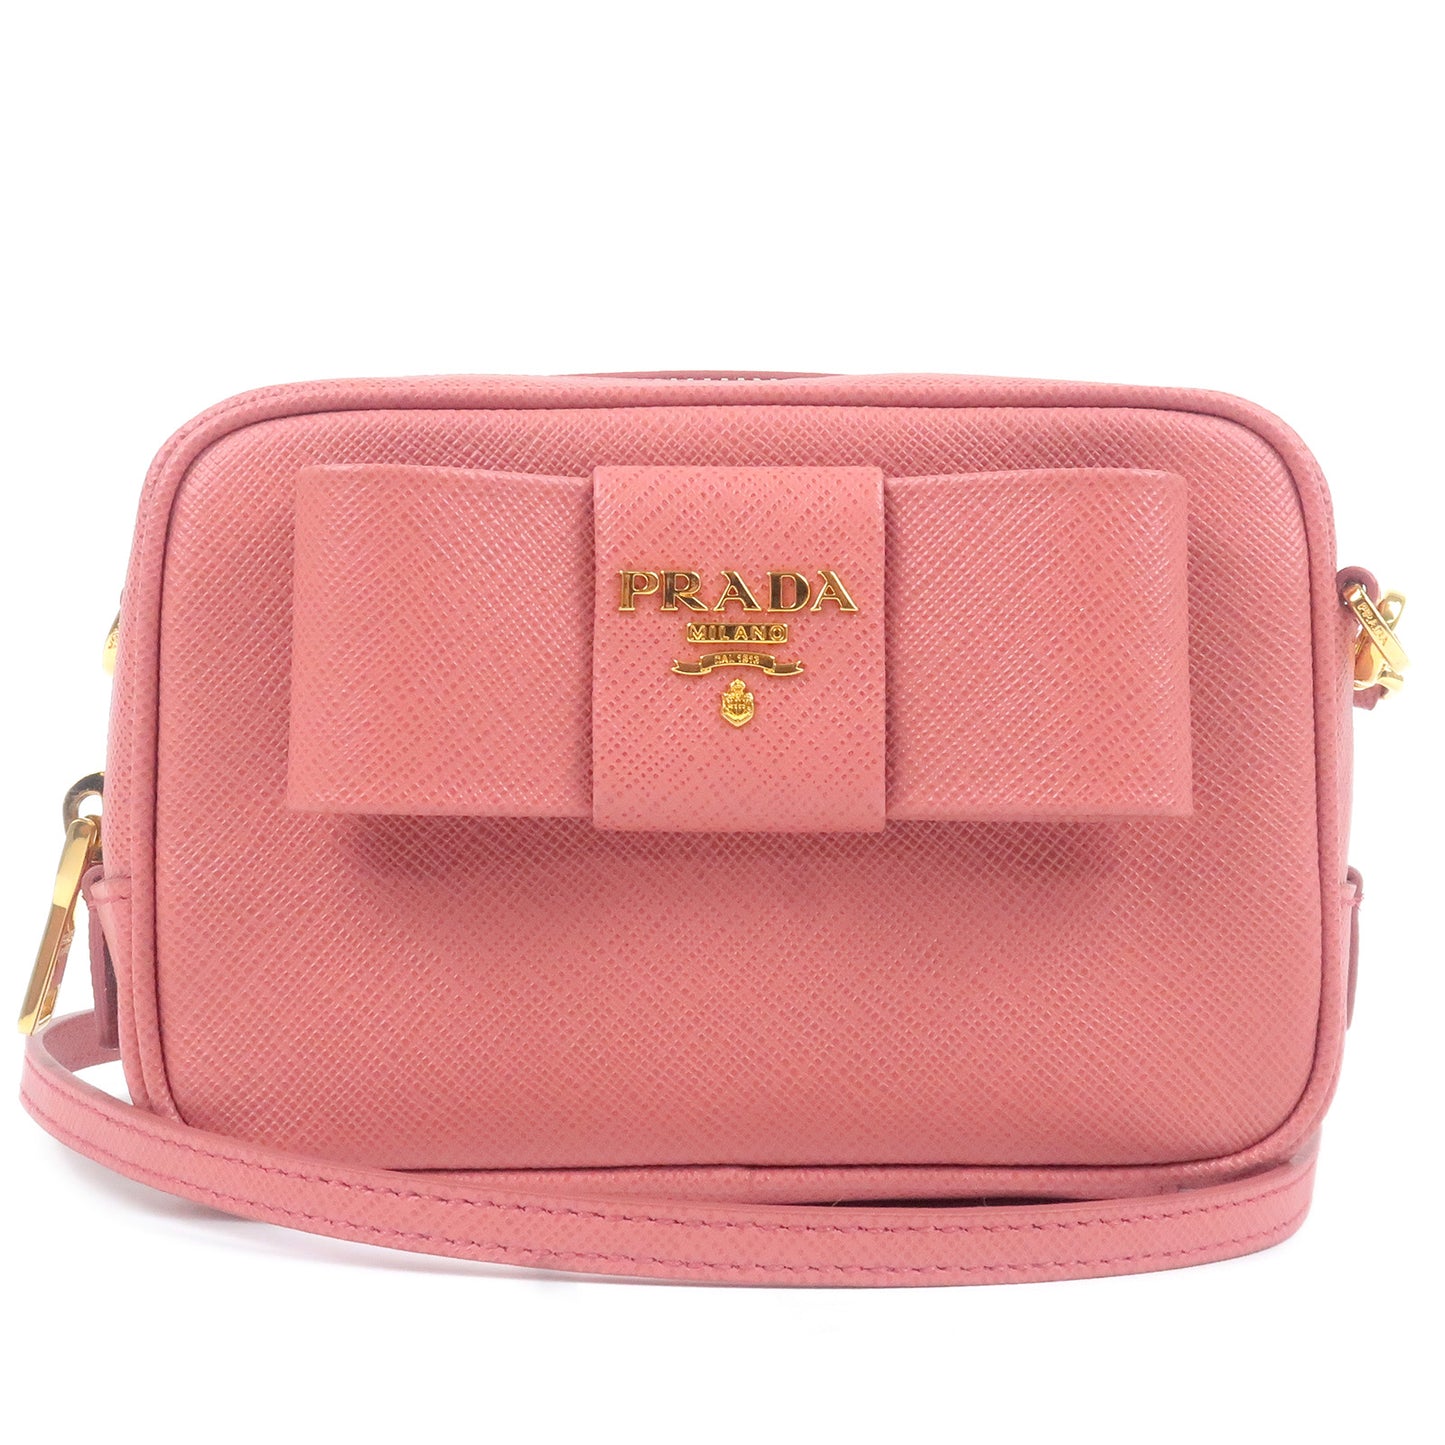 PRADA-Ribbon-Leather-Shoulder-Bag-Purse-TAMARIS-Pink-1NF674